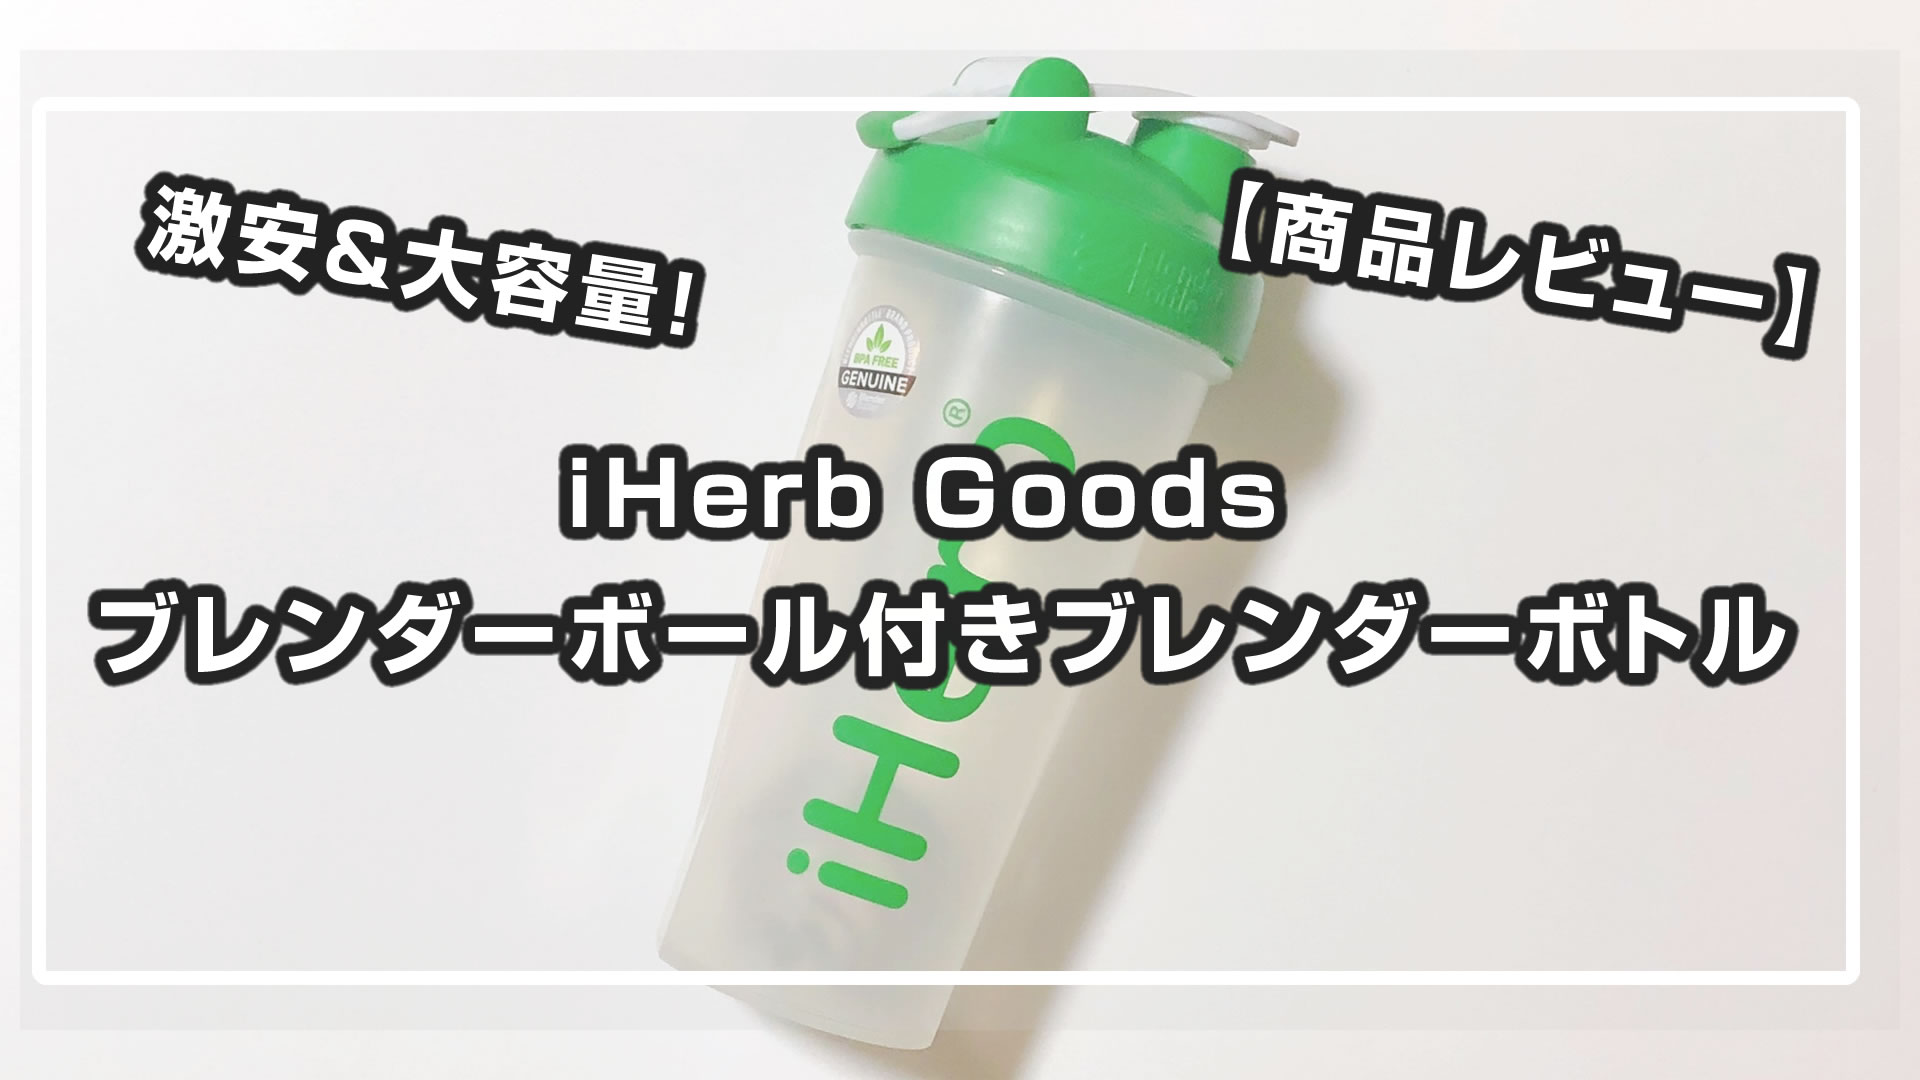 Blender Bottle社のブレンダーボトルを安く買いたい方へ！iHerb Goods ブレンダーボール付きブレンダーボトルのレビュー